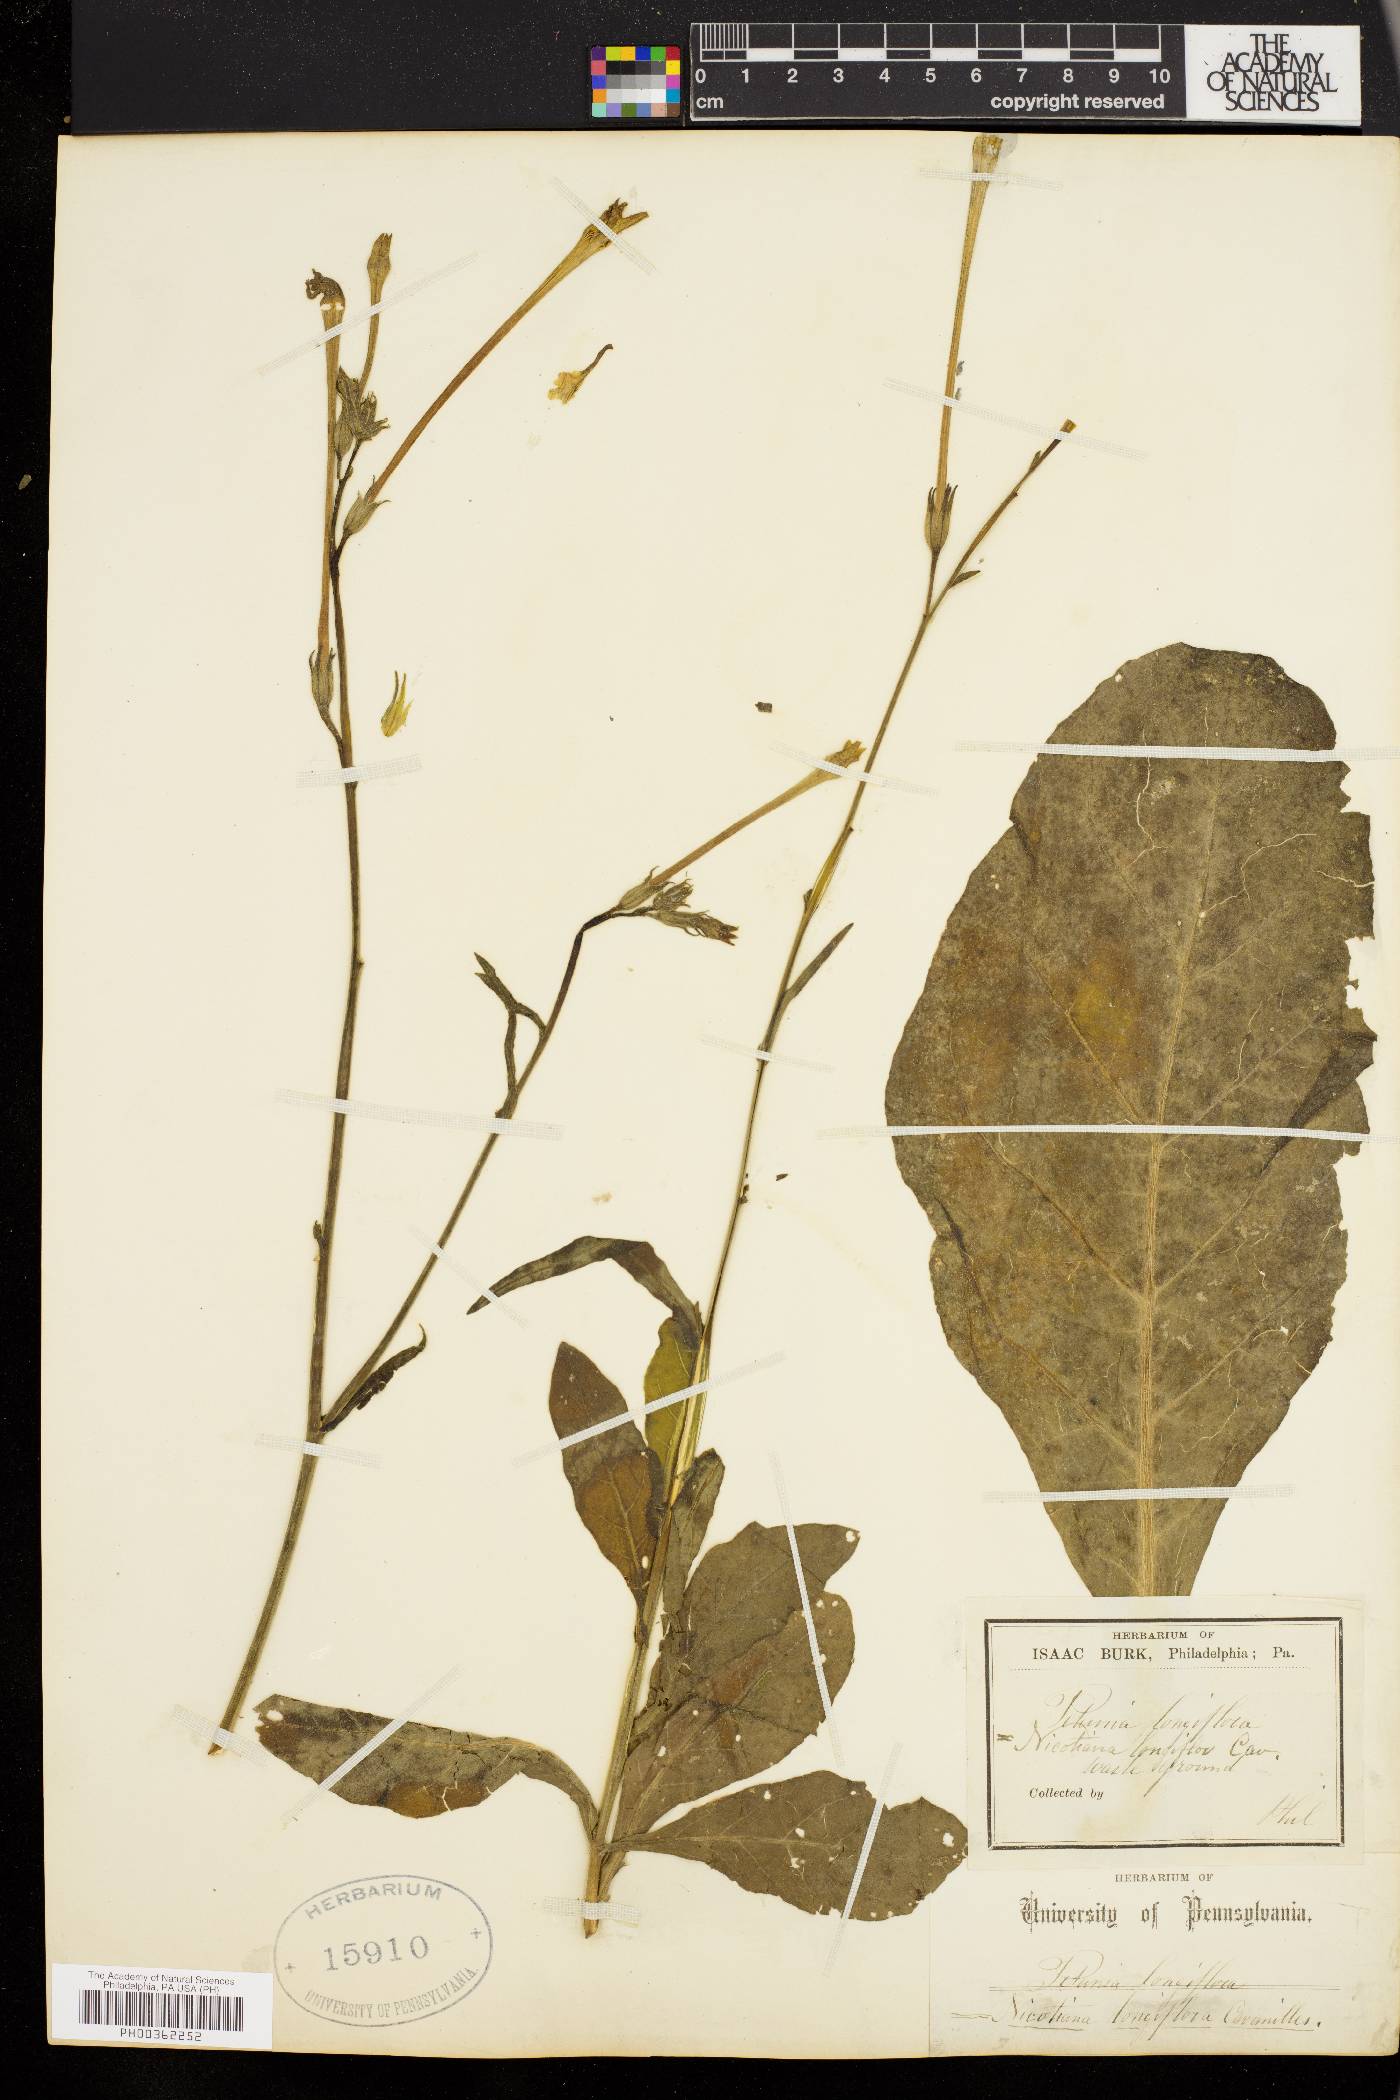 Nicotiana longiflora image